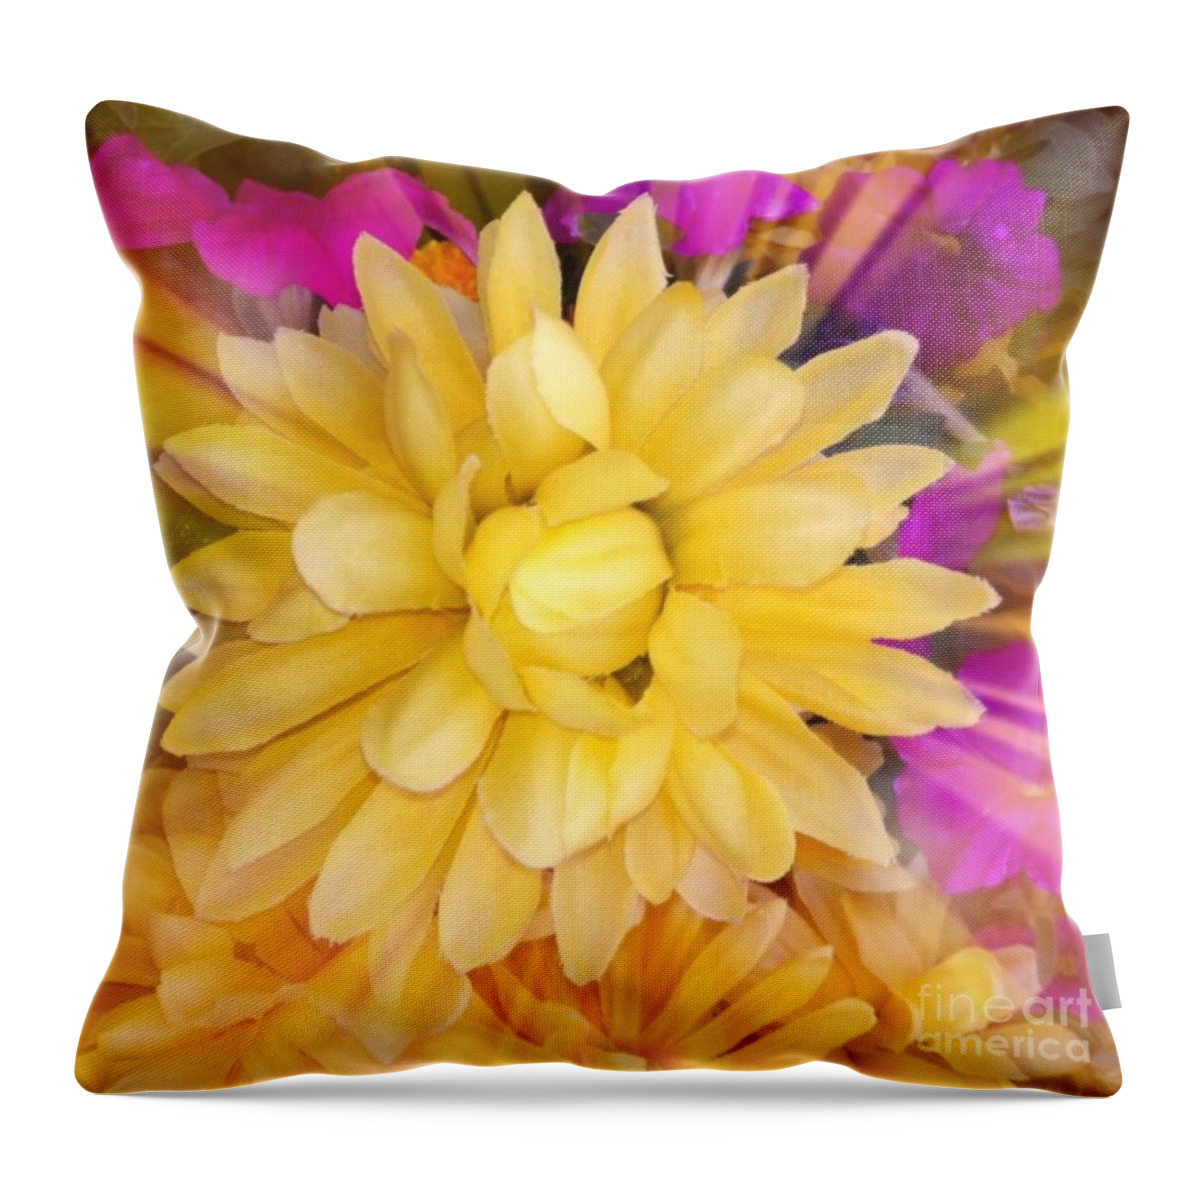 Photograph Yellow Flower Nature Beauty Sunburst Throw Pillow featuring the photograph Flower Sunburst by Gayle Price Thomas